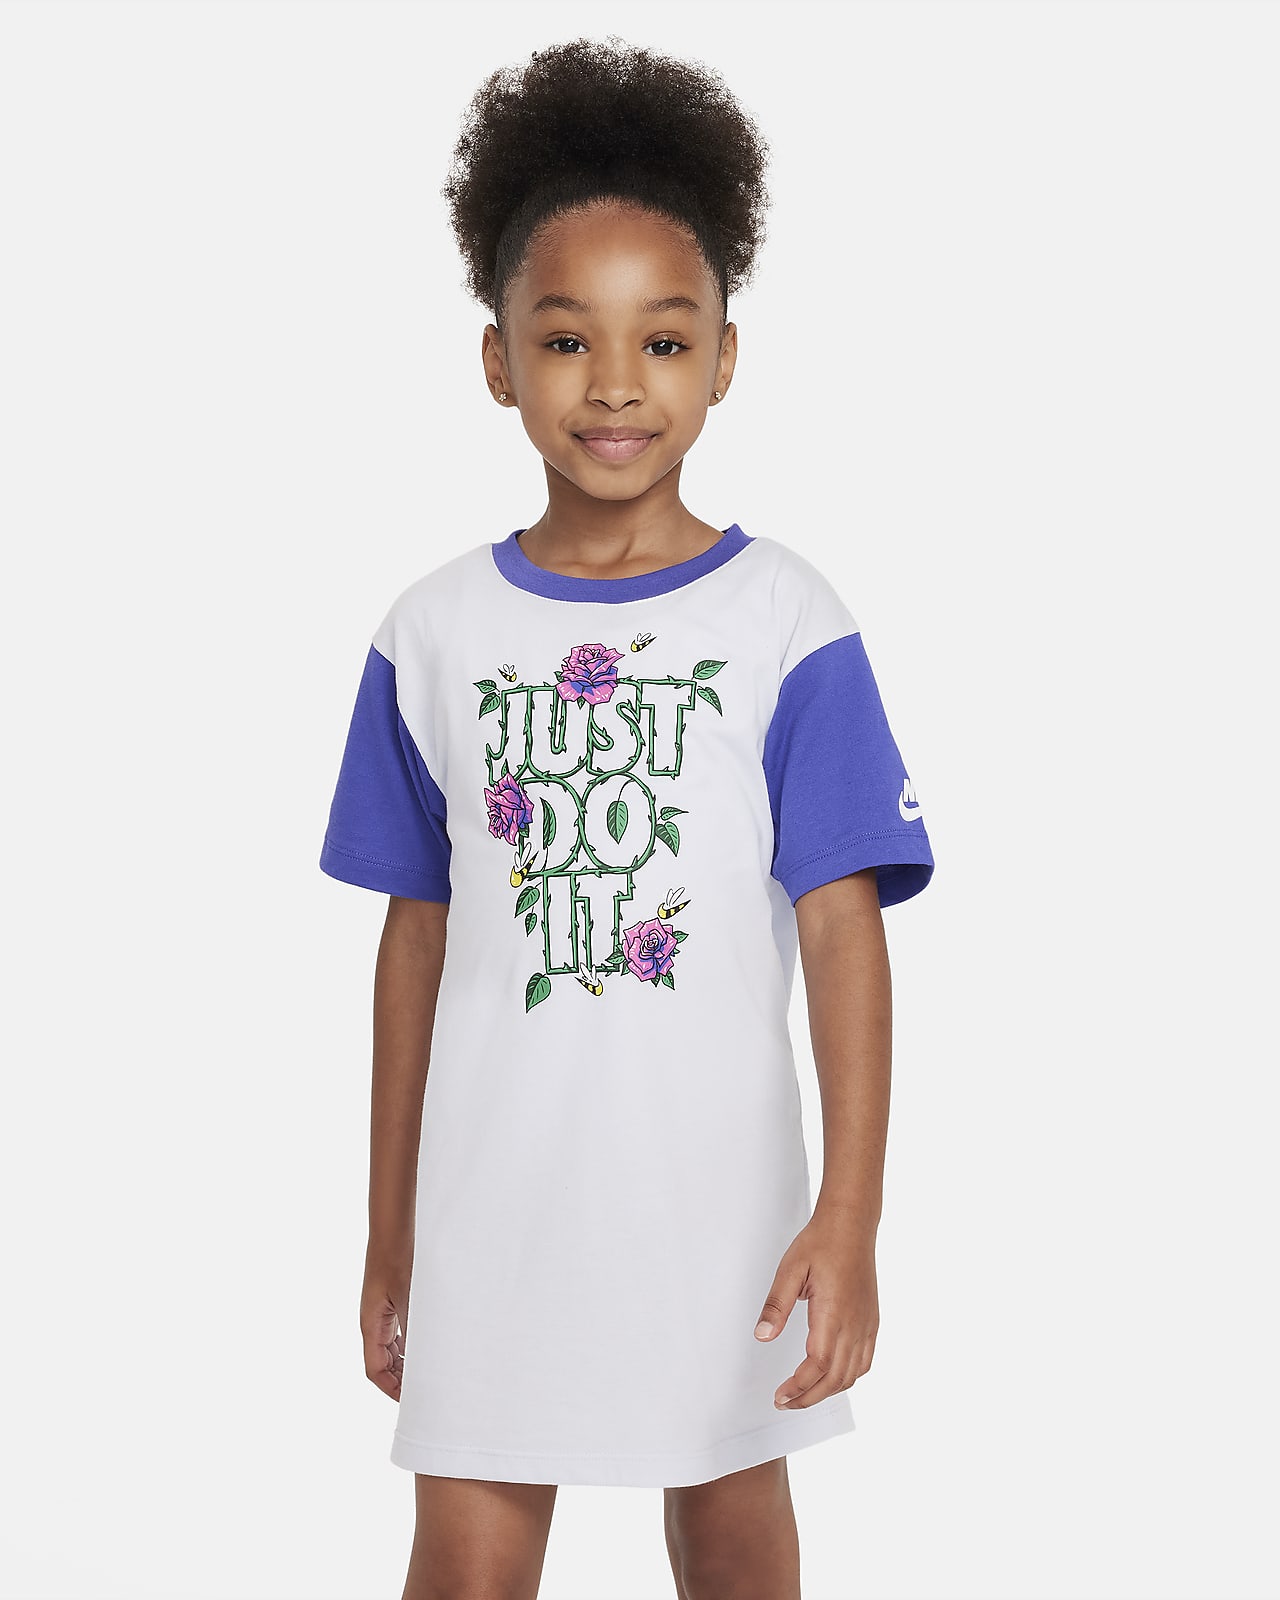 Nike Little Kids' Graphic Tee Dress